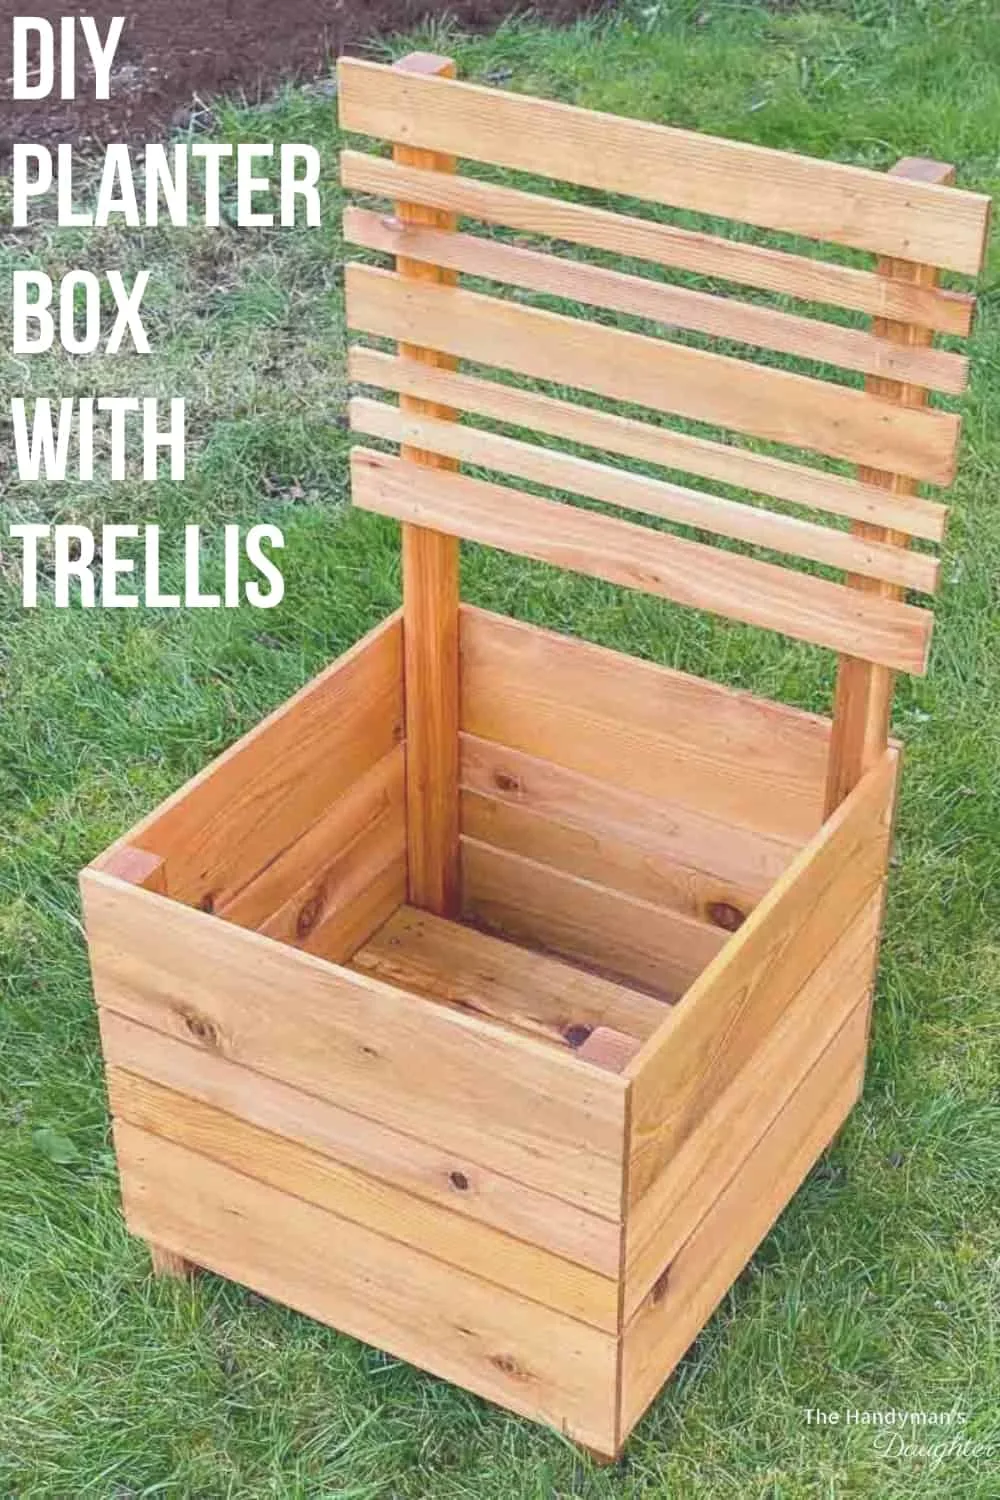 Planter Box with Trellis on grassy lawn